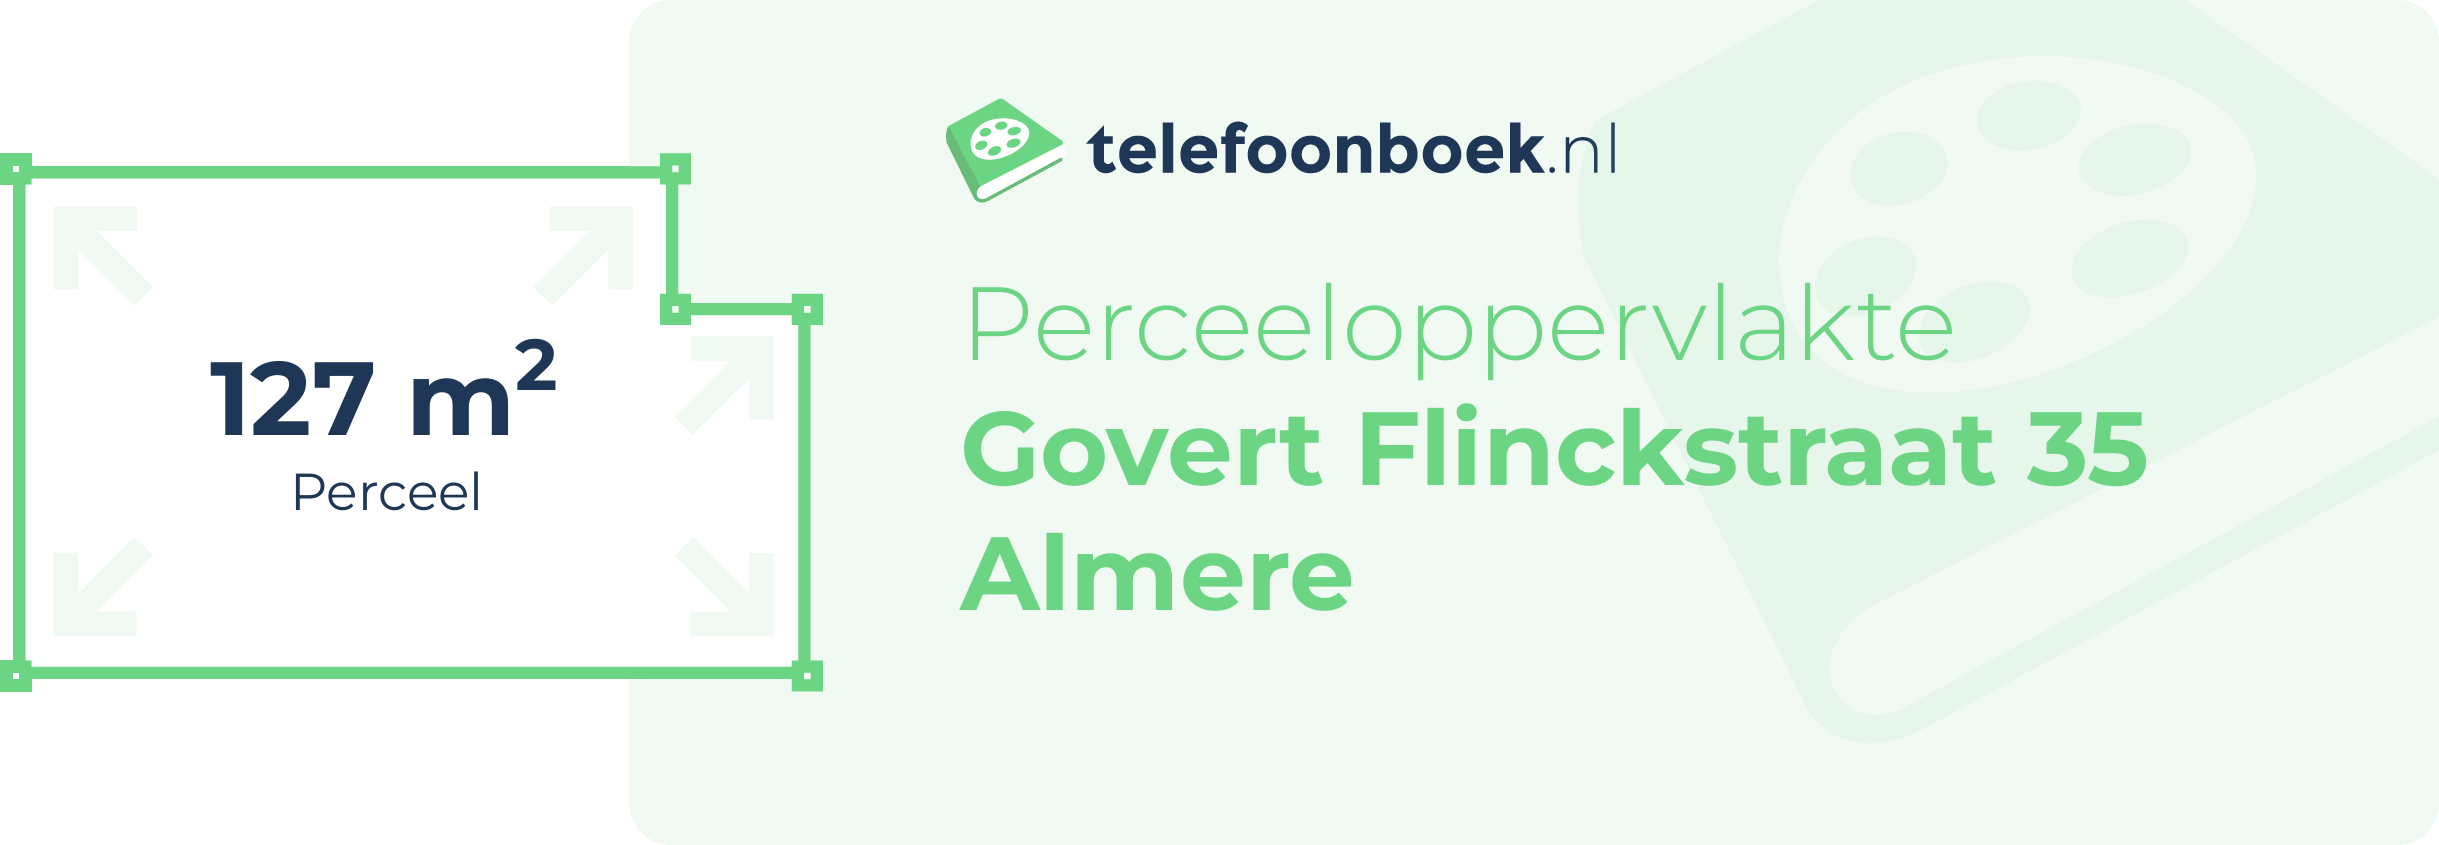 Perceeloppervlakte Govert Flinckstraat 35 Almere